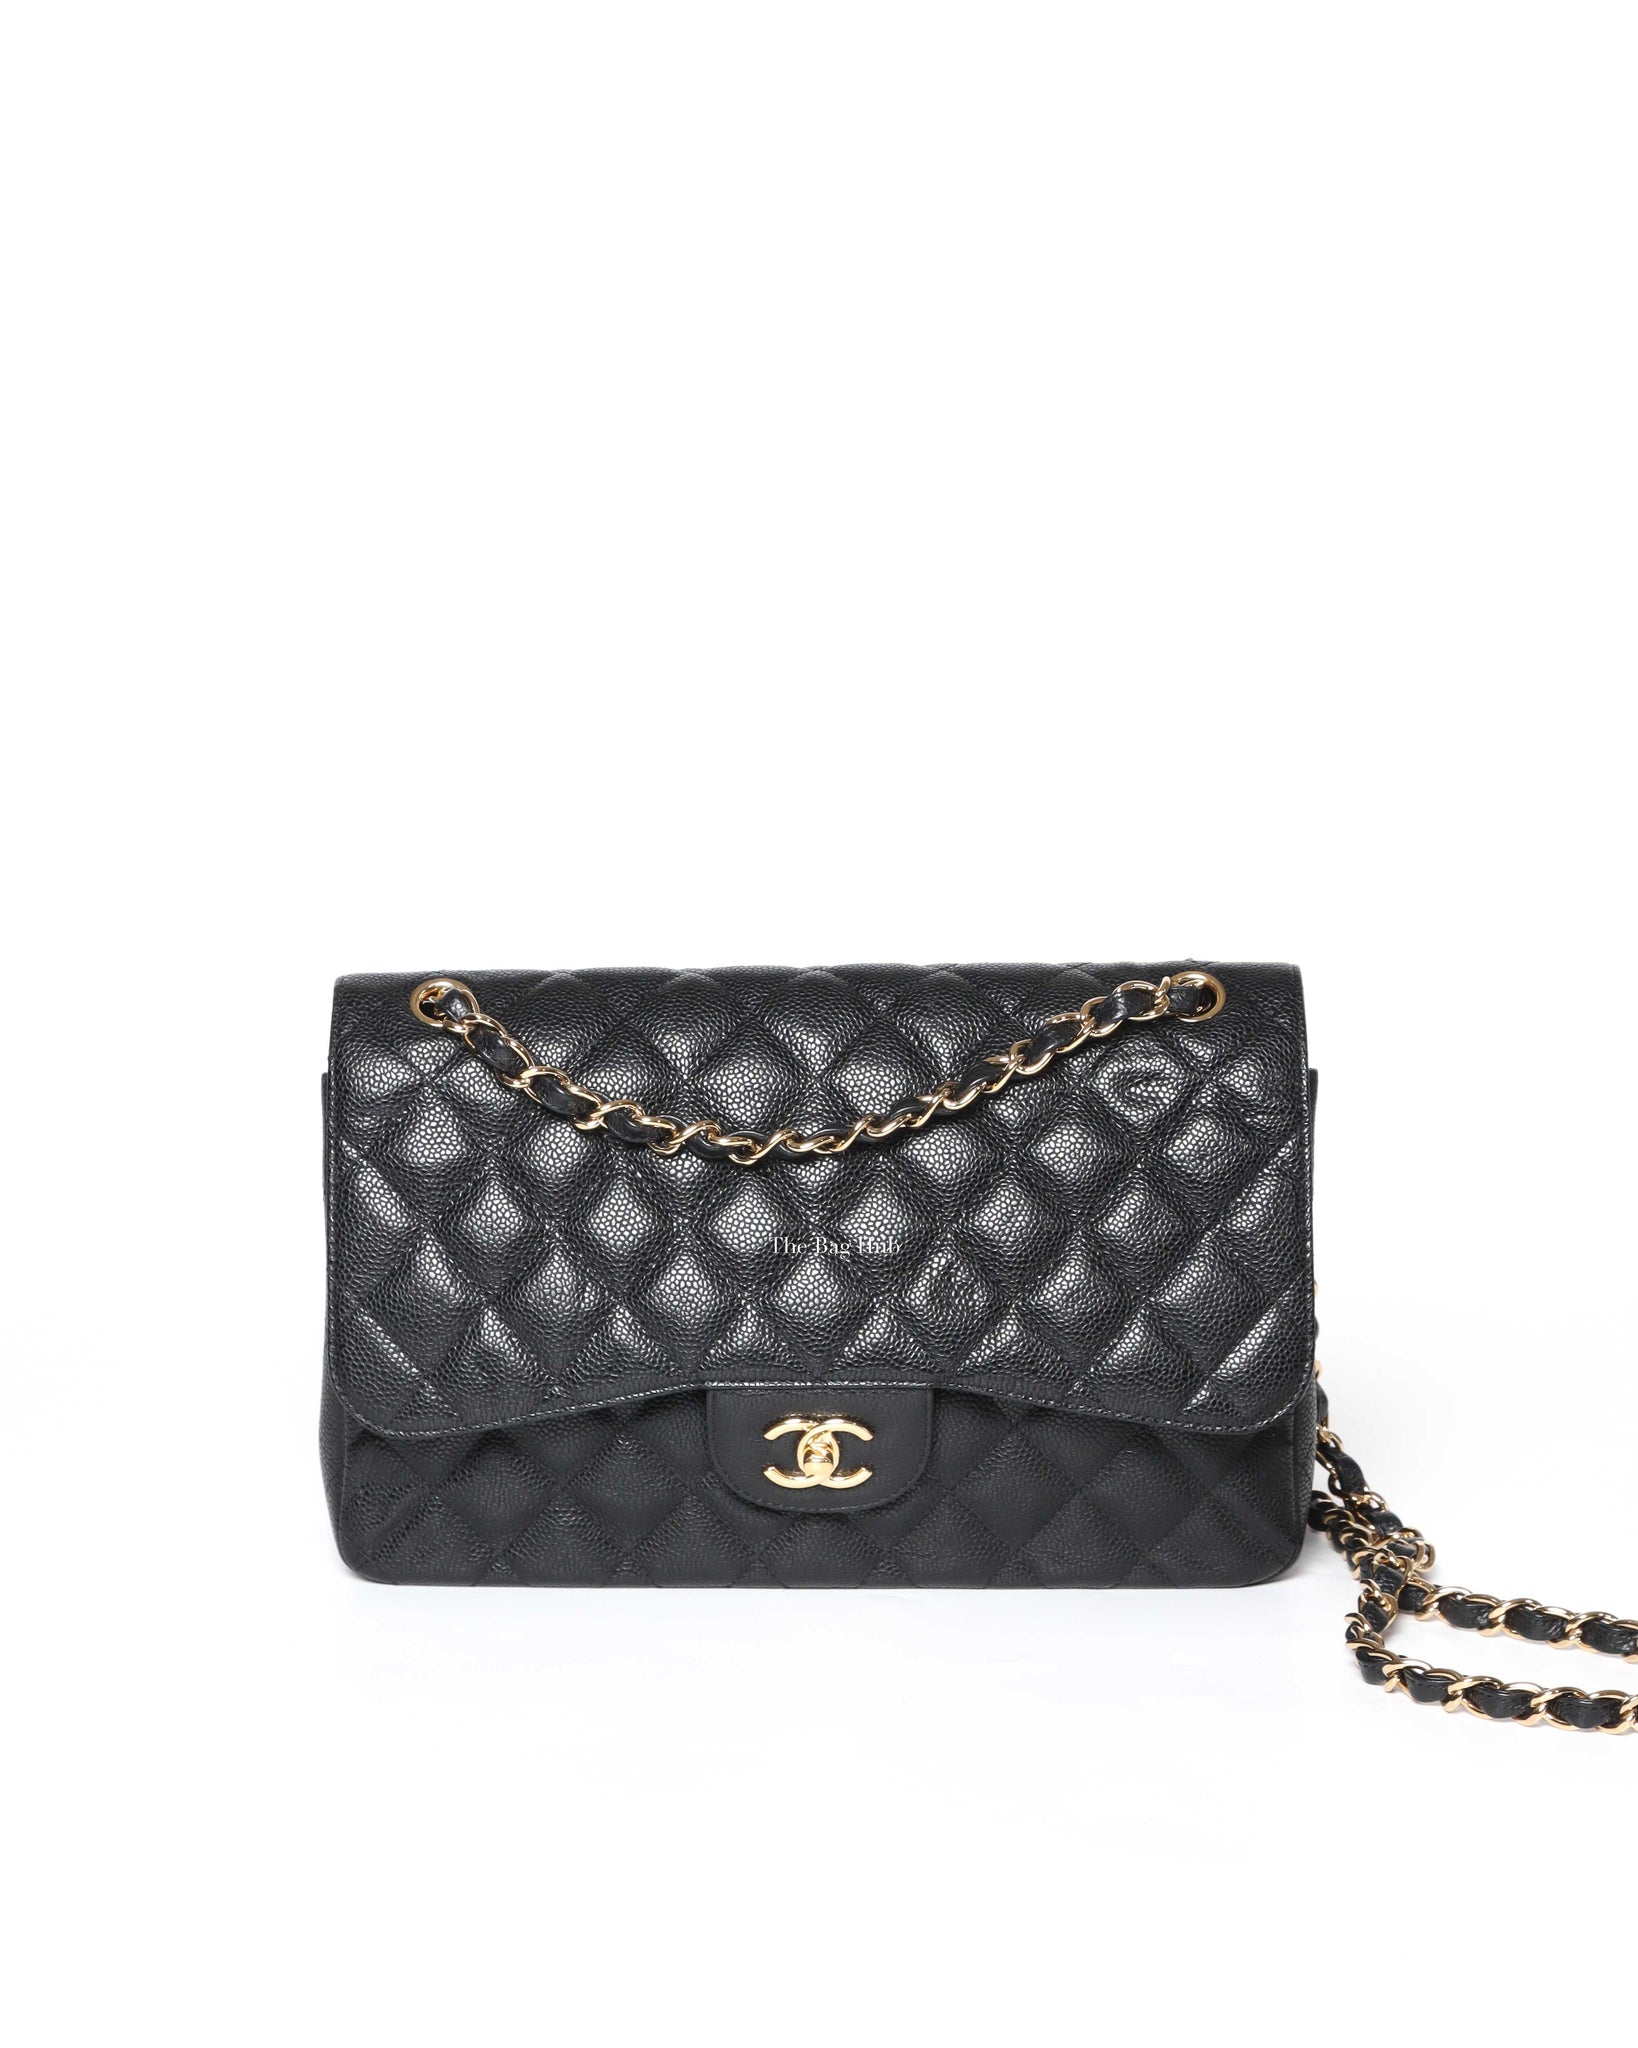 Chanel Black Caviar CC Classic Jumbo Double Flap Bags - Chanel